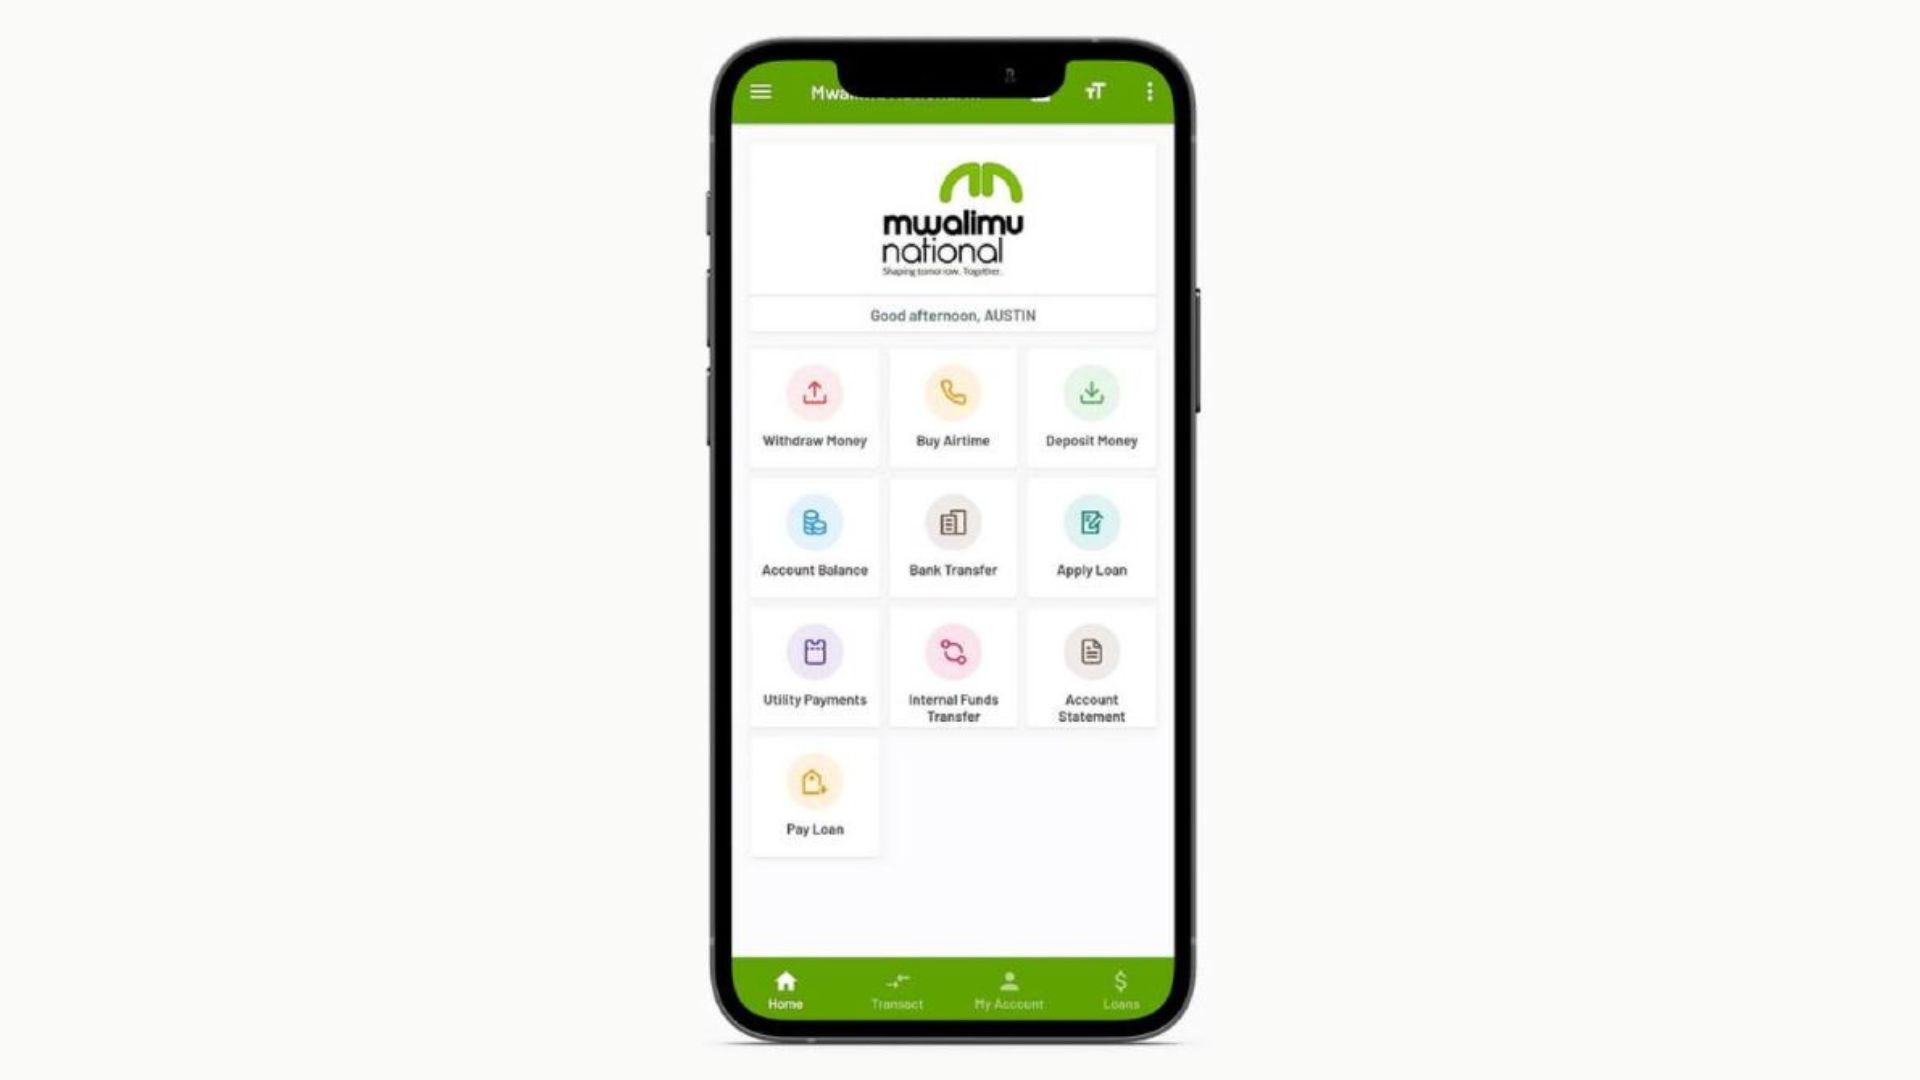 MwalimuHela Mobile banking app by Mwalimu National Sacco